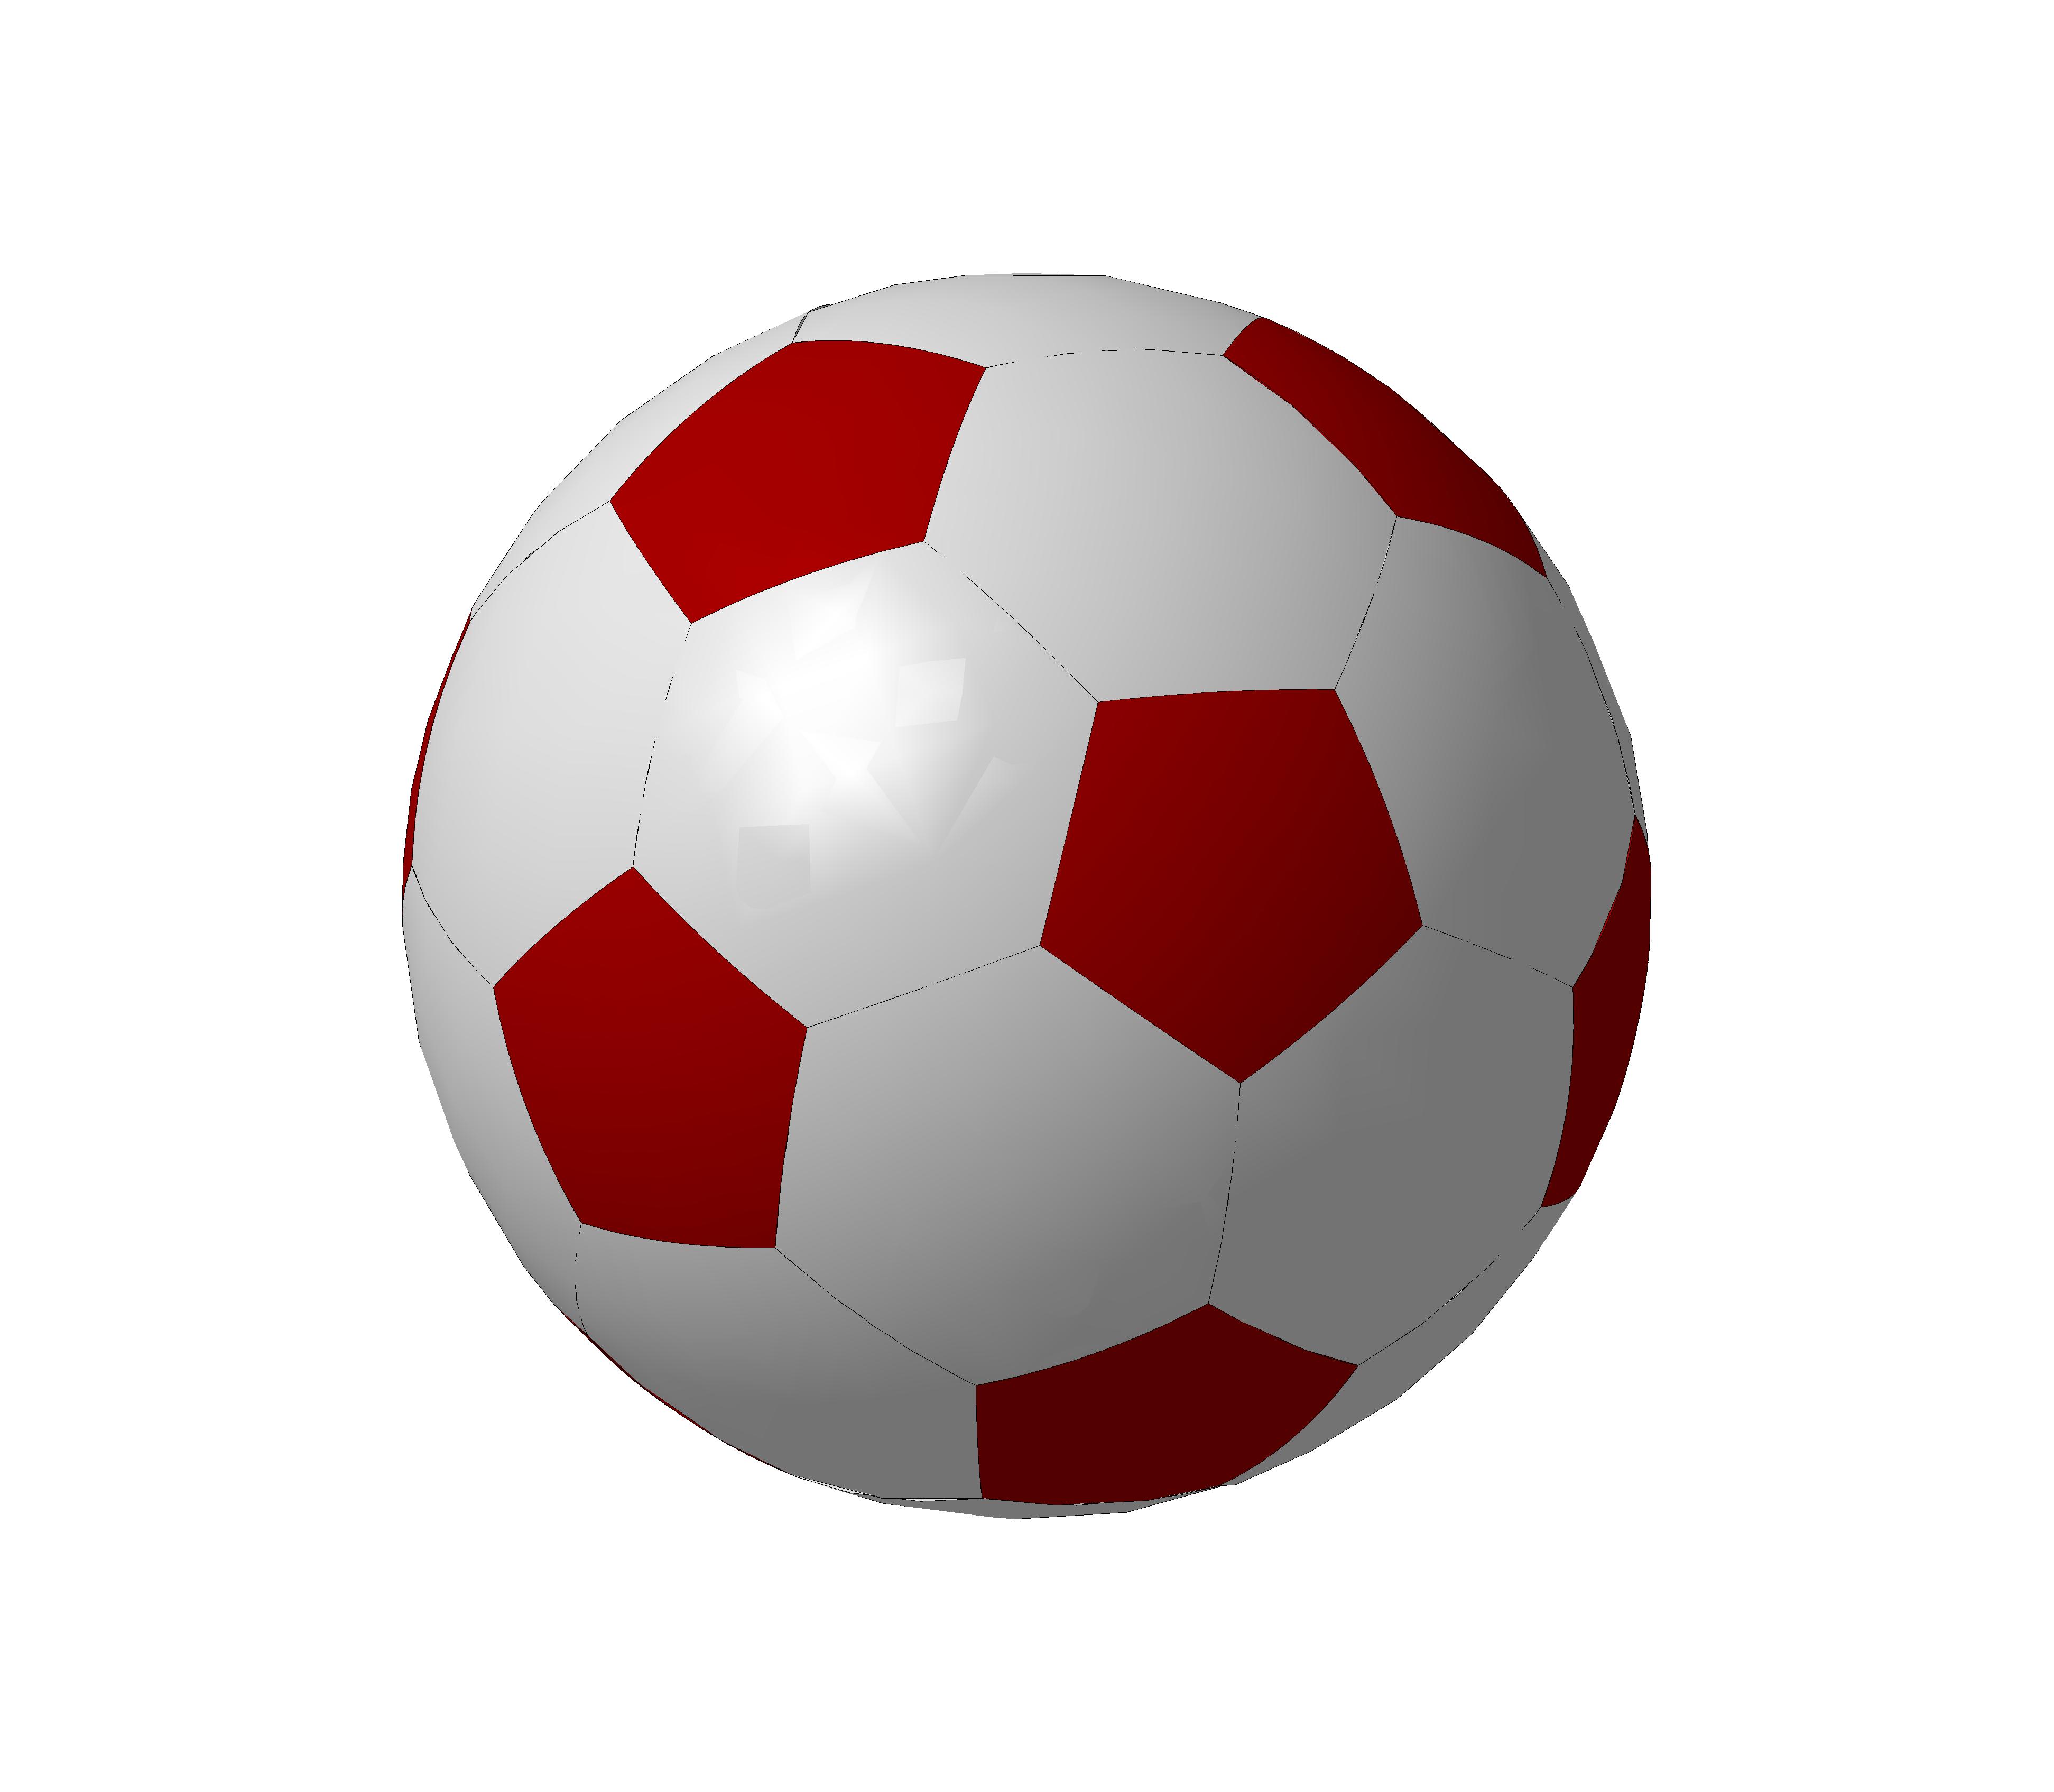 Ball part. Мяч. Мяч на прозрачном фоне. Мячики для детей. Мяч на белом фоне.